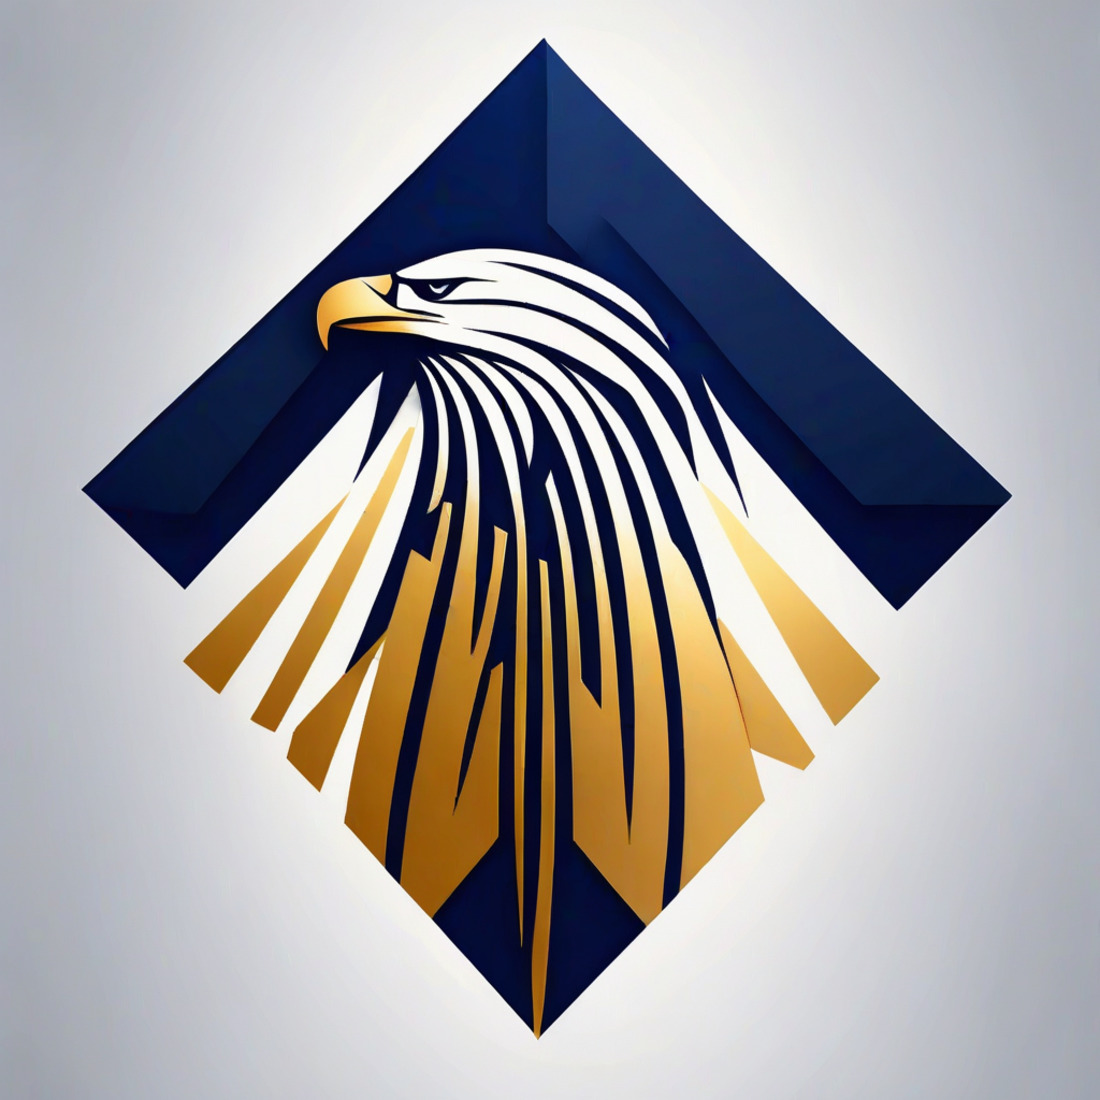 Eagle Defender gaming14 logos Deal preview image.